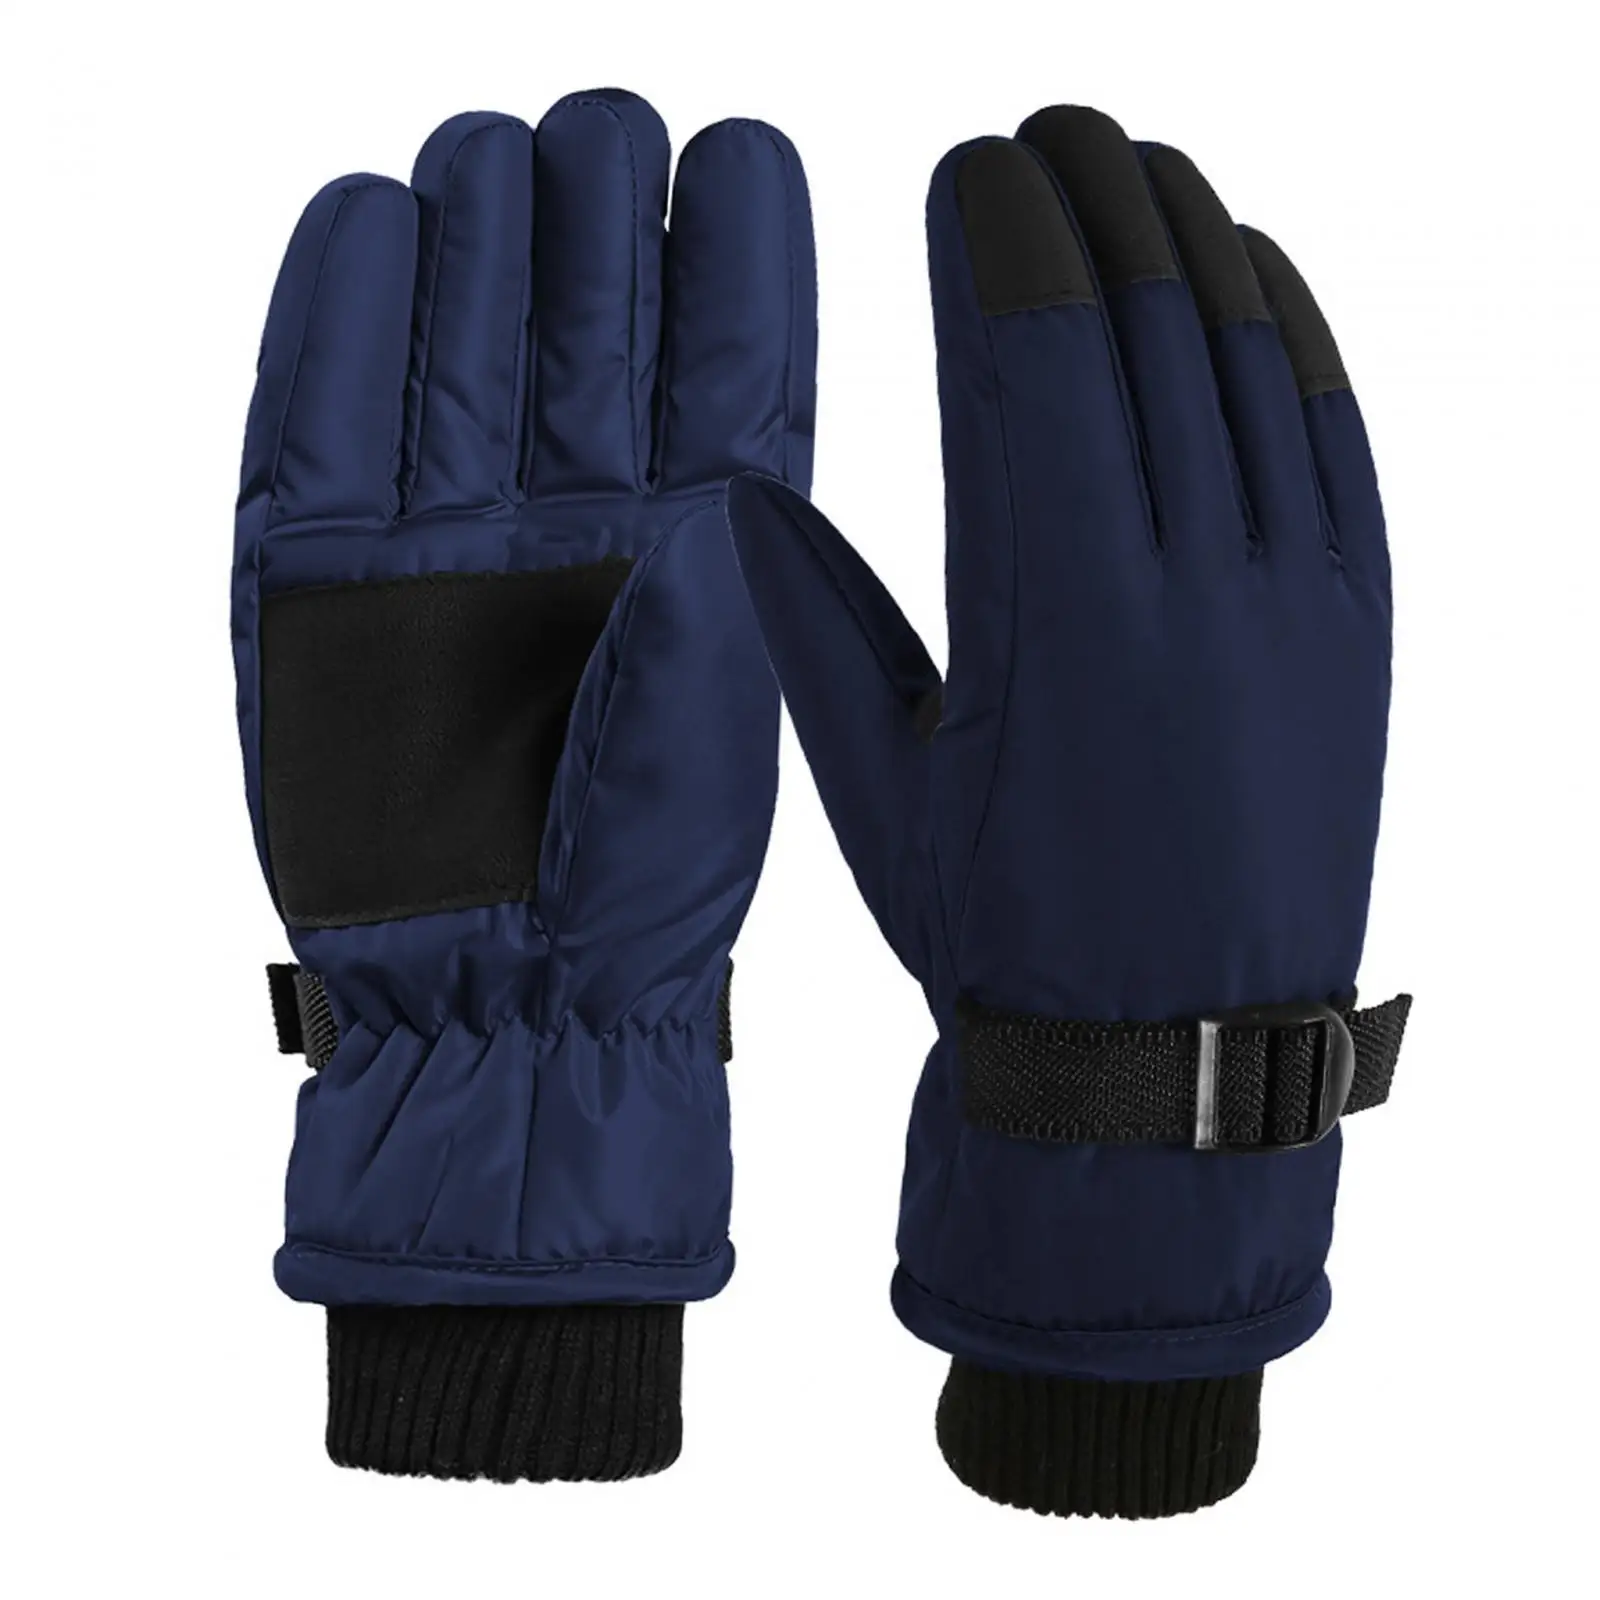 Kids Winter Gloves Ski Gloves Mittens Waterproof Gloves for Cold Weather for Girls Boys Snowboarding Hiking Skateboarding